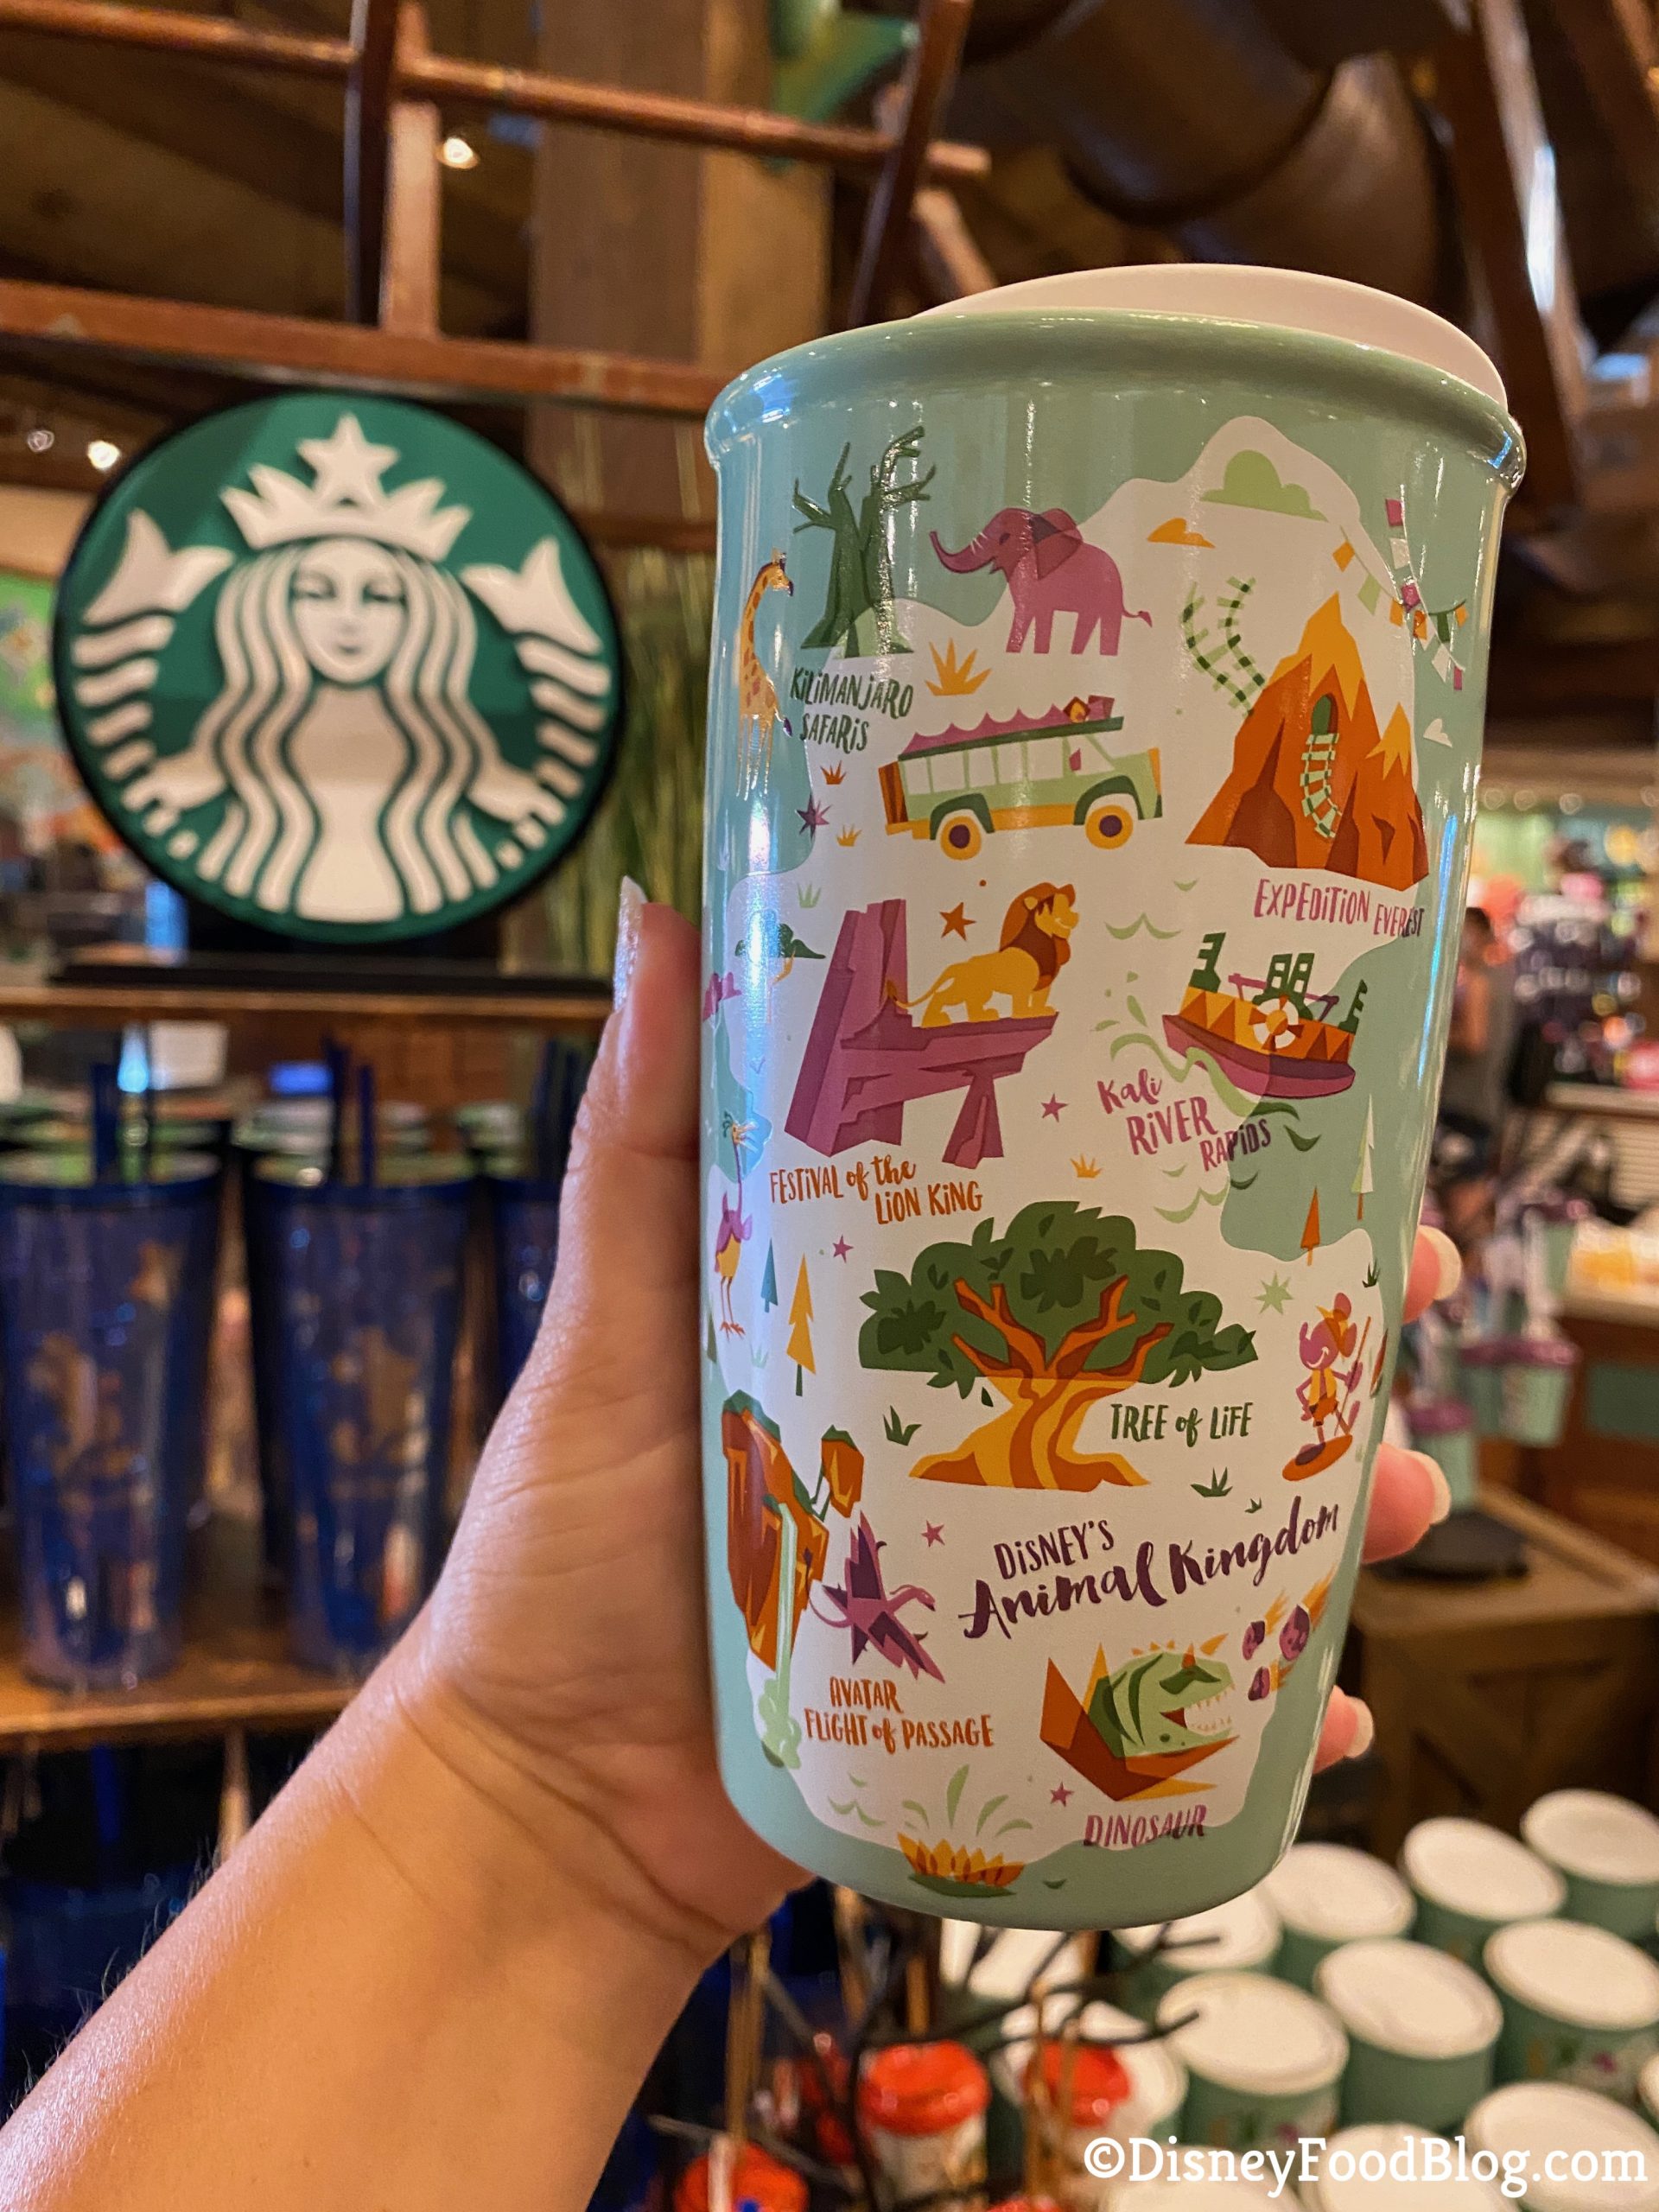 Disney Starbucks Ornament - Animal Kingdom Cup - Green